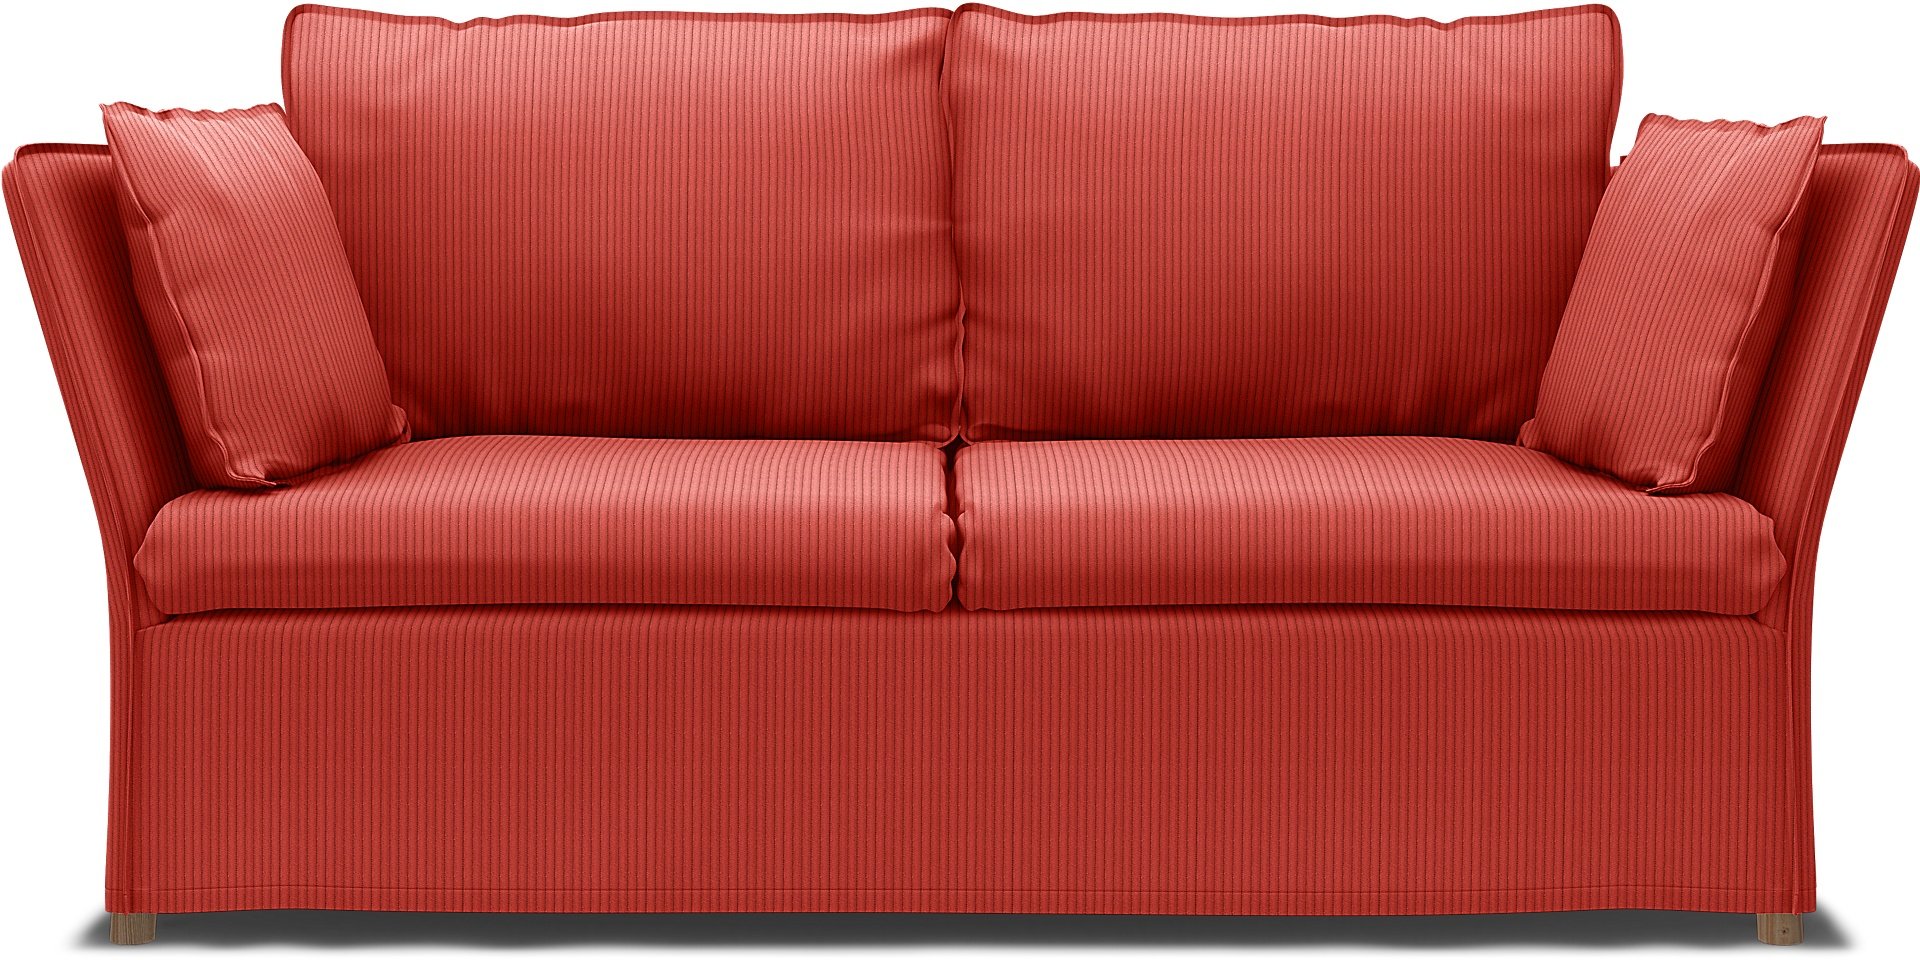 IKEA - Backsalen 2 seater sofa, Brick Red, Corduroy - Bemz